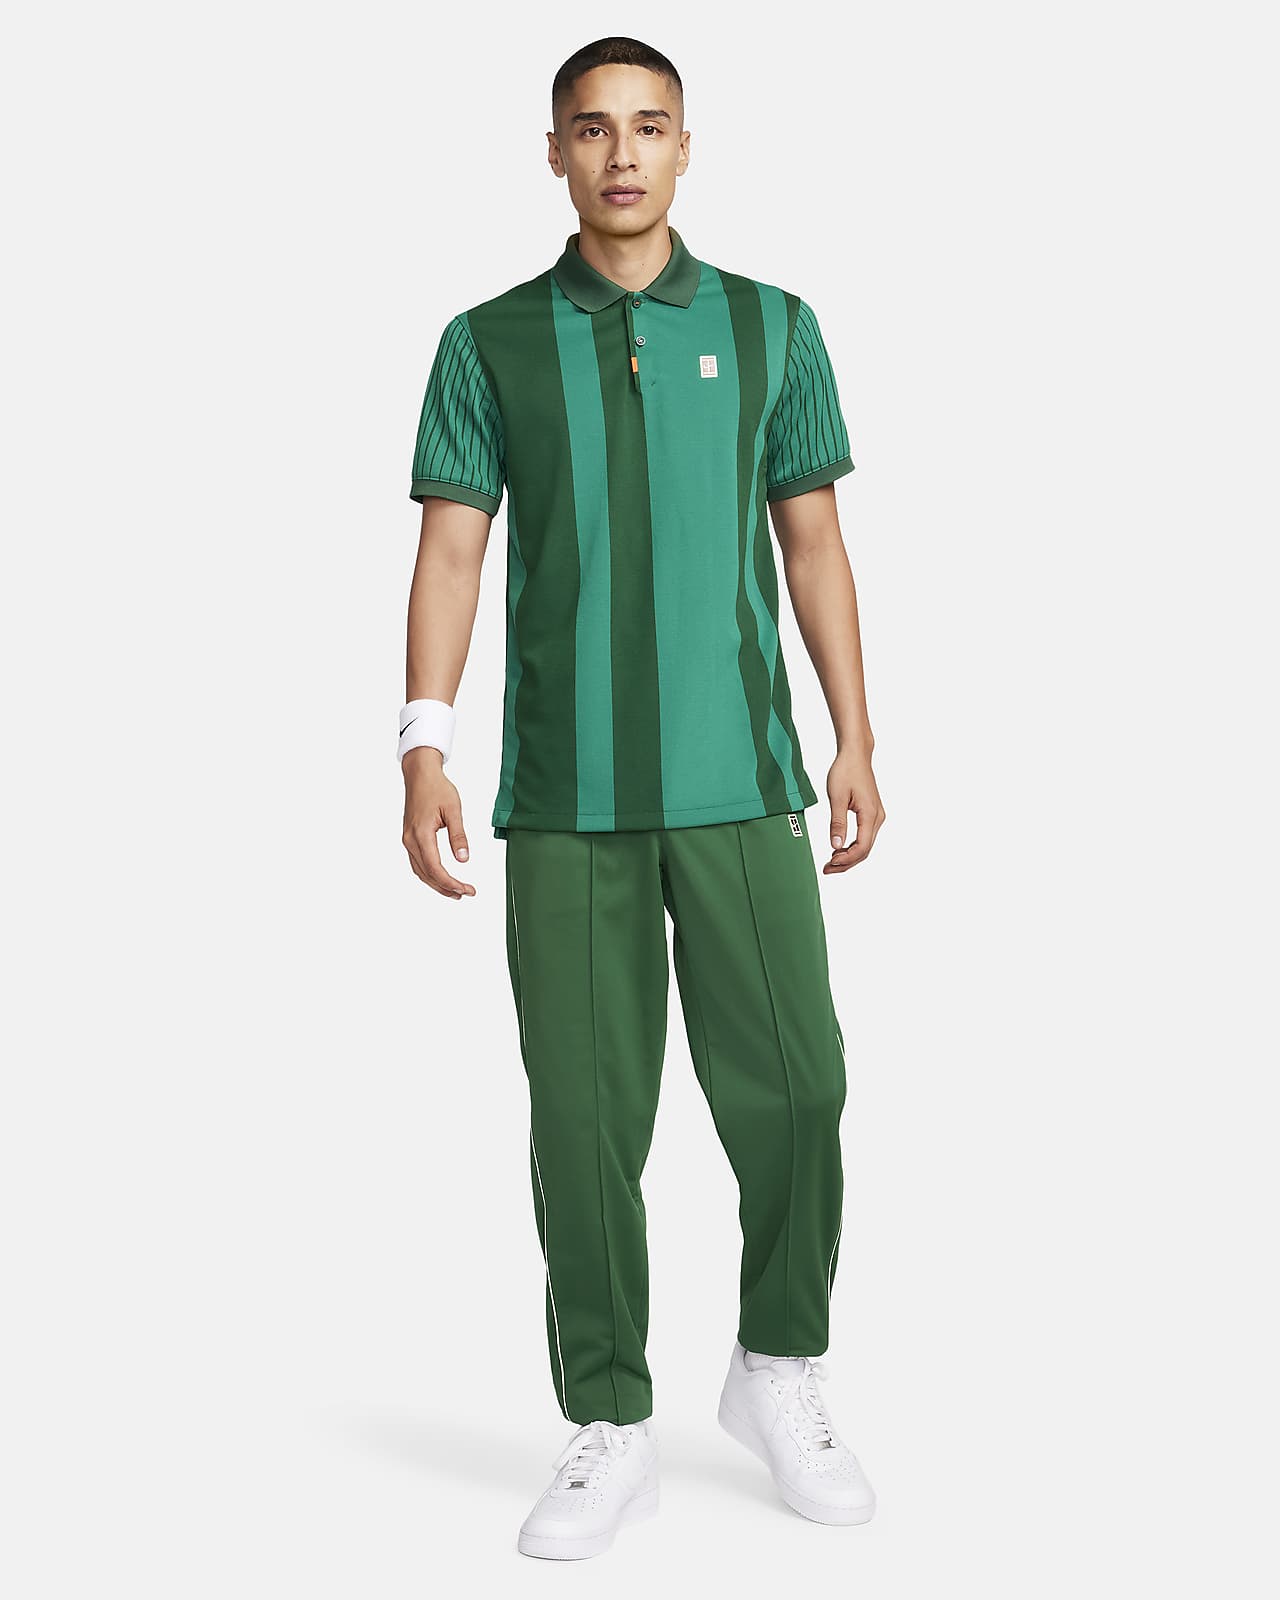 Nike The Athletic Dept Polo Shirt Mens Size XL Gray Stripe Short